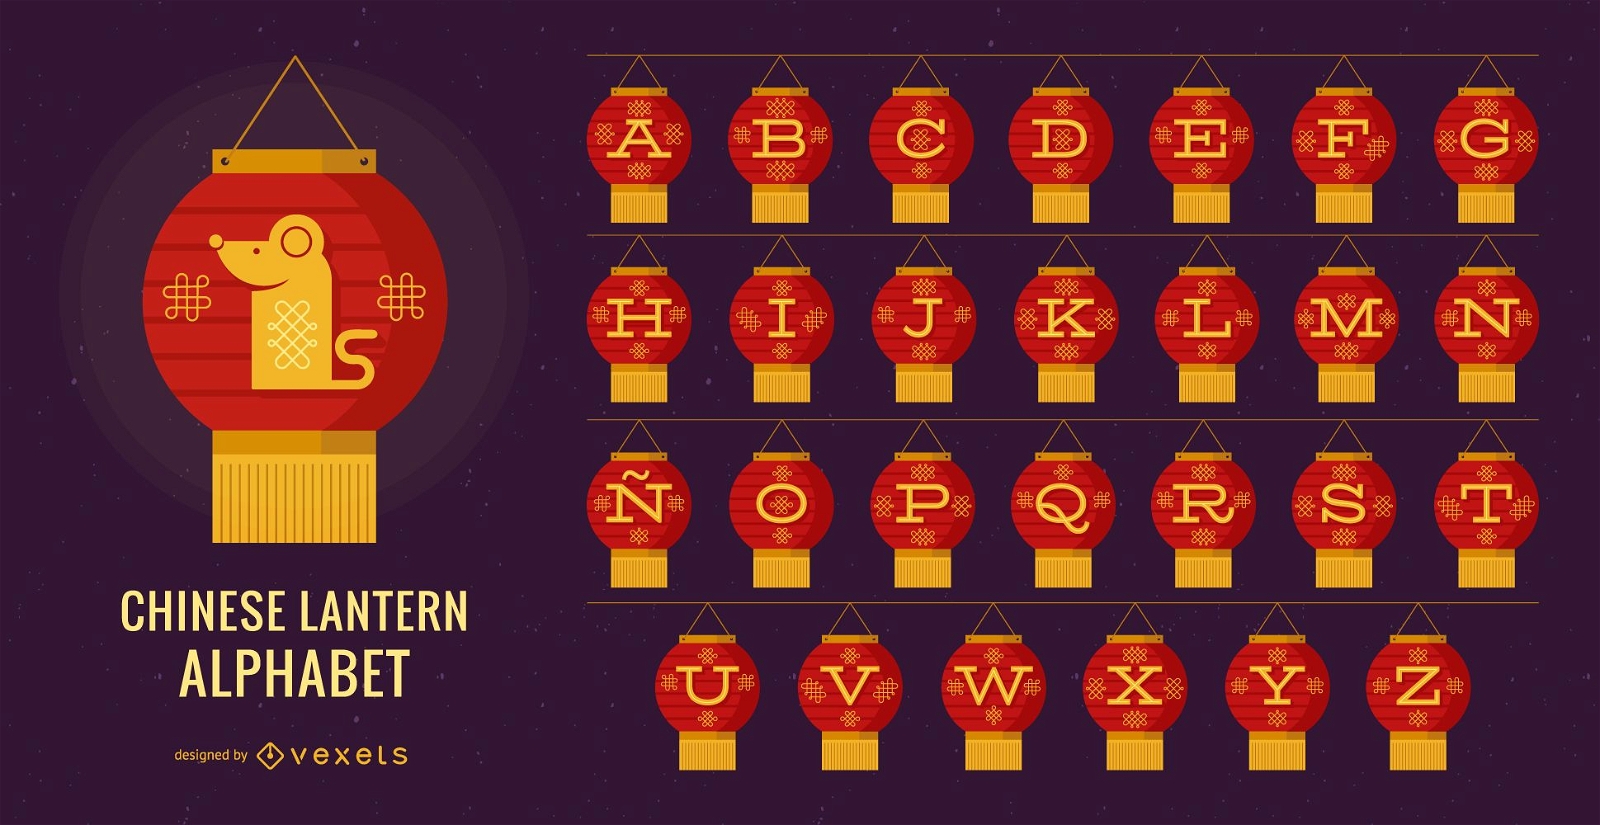 Conjunto de letras do alfabeto de lanterna chinesa